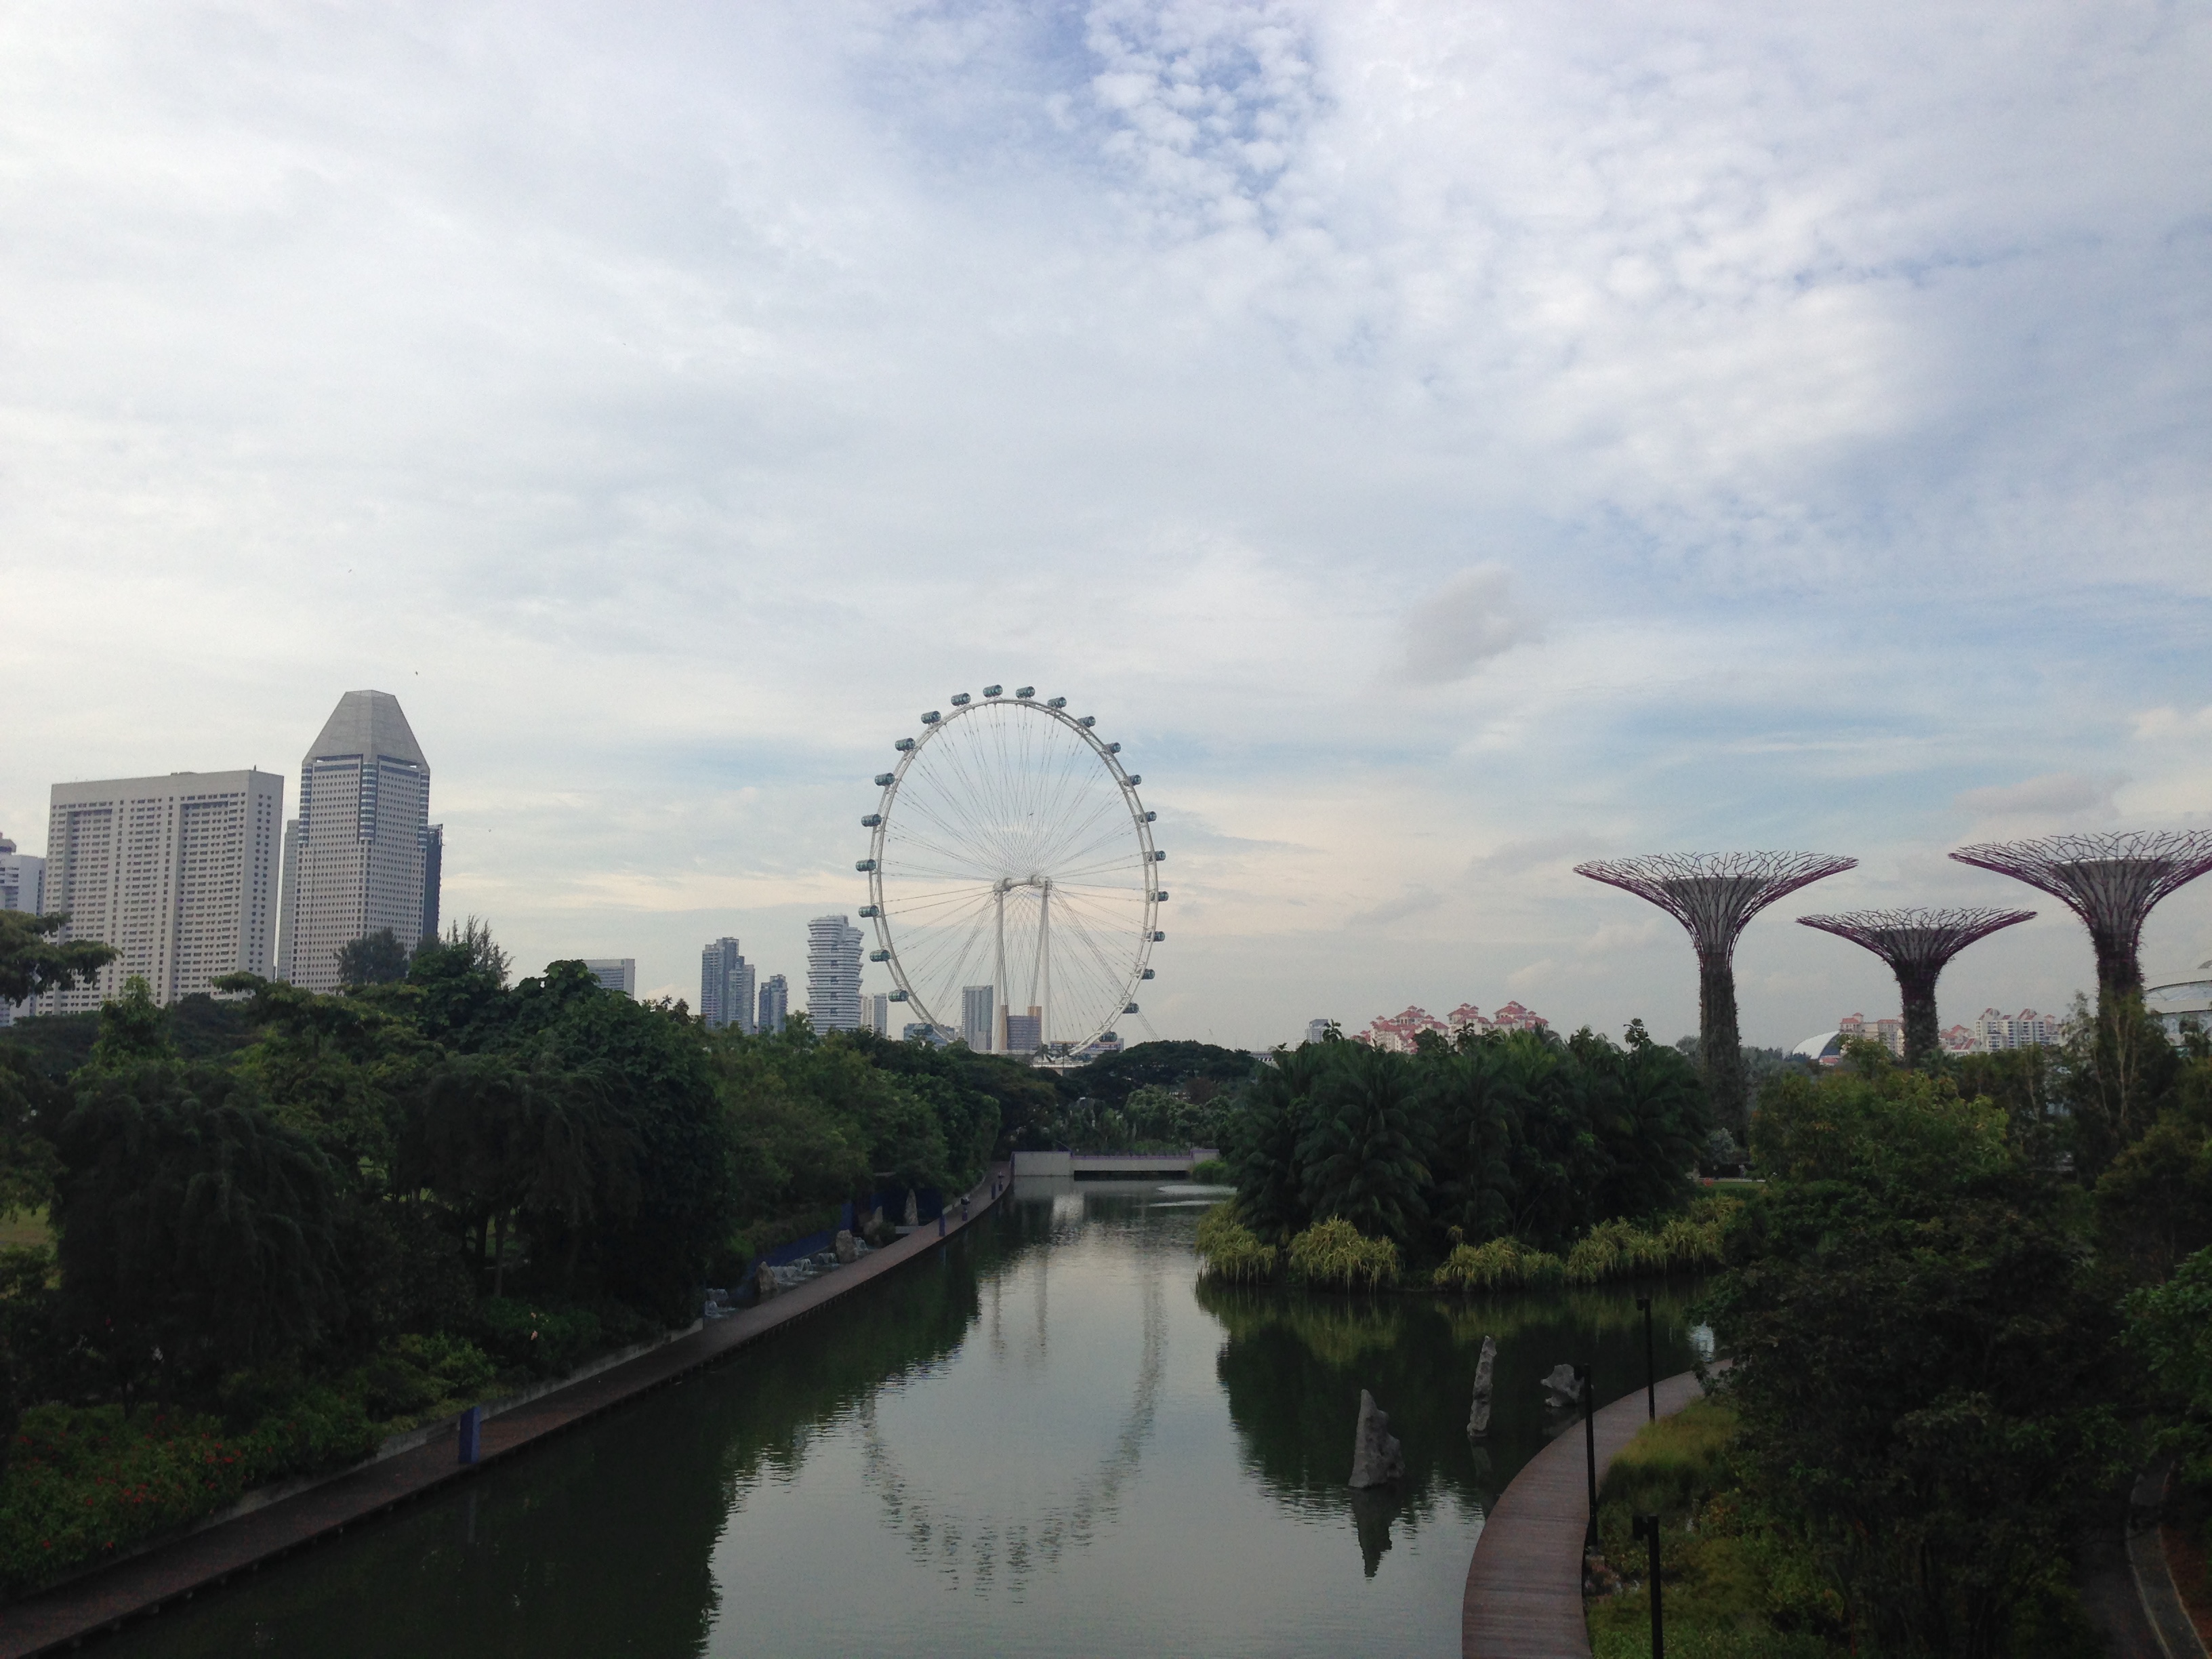 Singapore skyline including the Singapore Flyer, the world’s second highest Ferris wheel